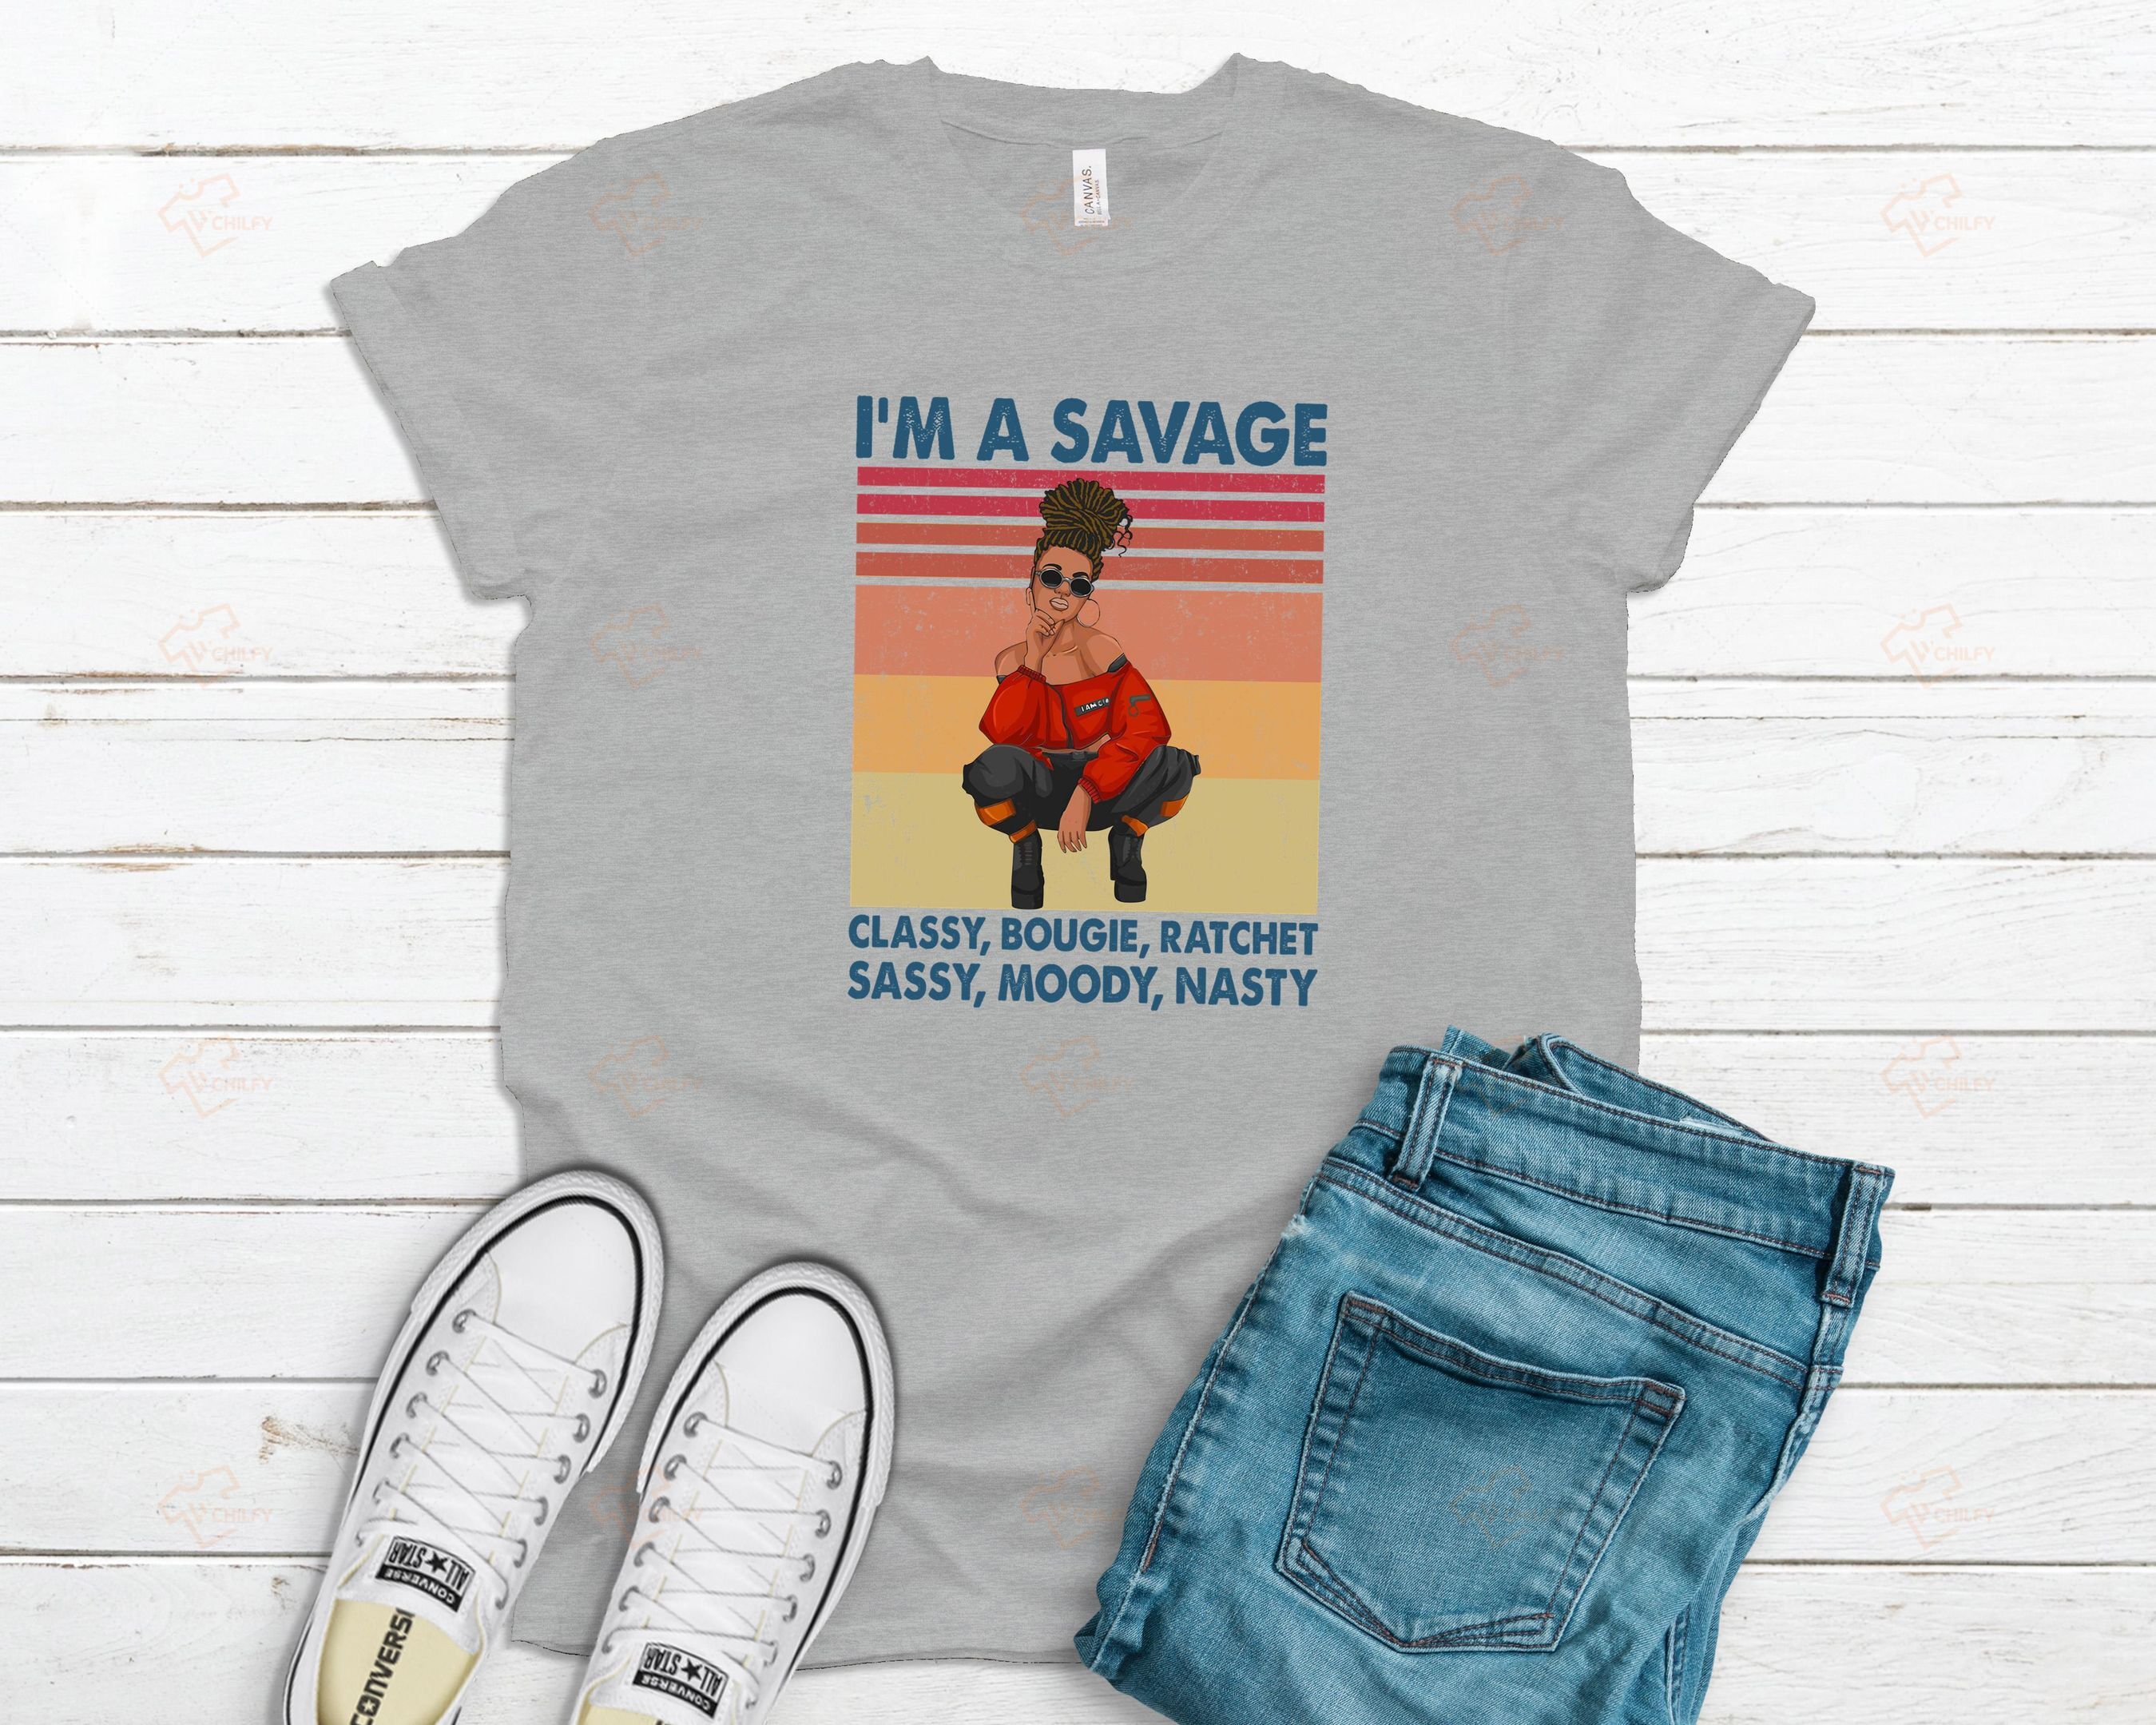 I’m a savage shirt, black girl shirt, dreadlocks girl shirt